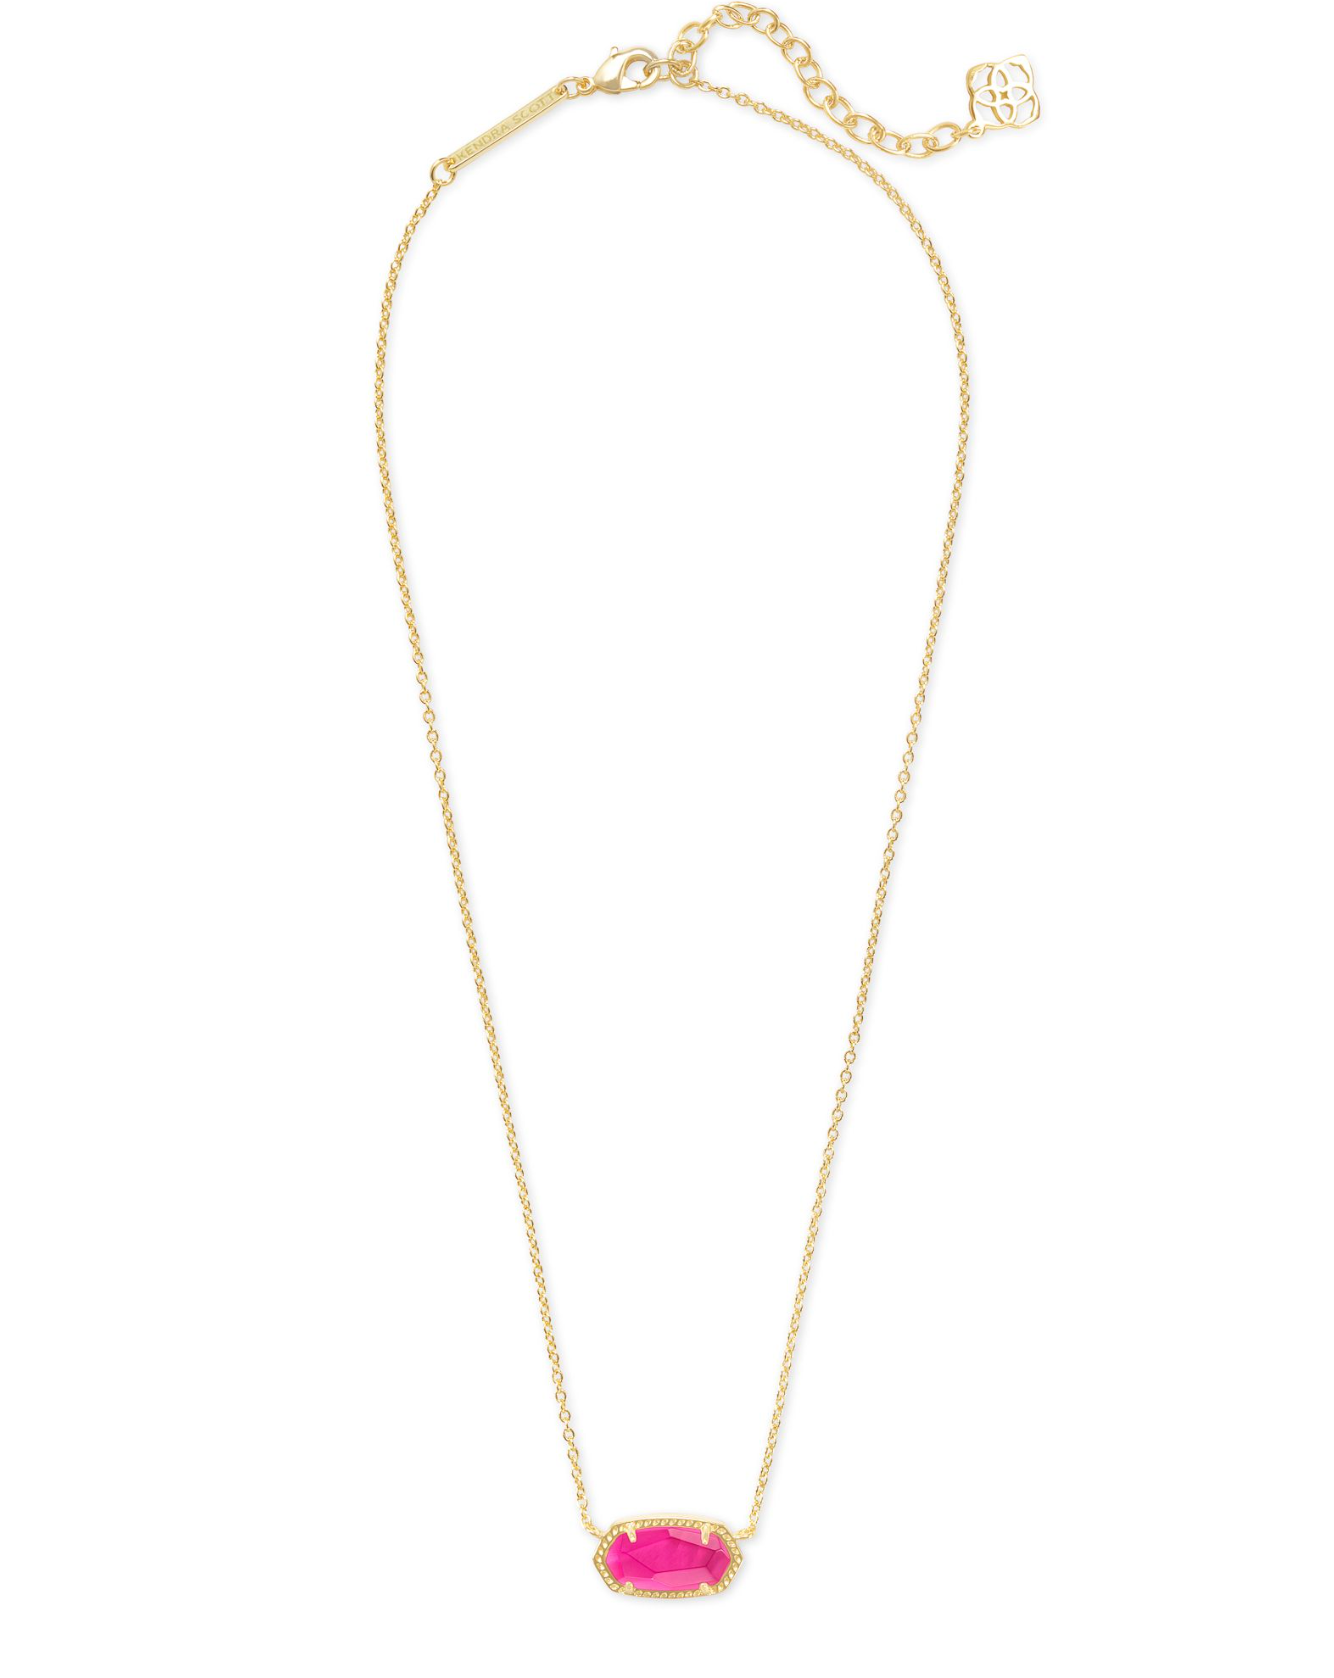 Elisa Gold Pendant Necklace in Azalea Illusion | KENDRA SCOTT - The Street Boutique 